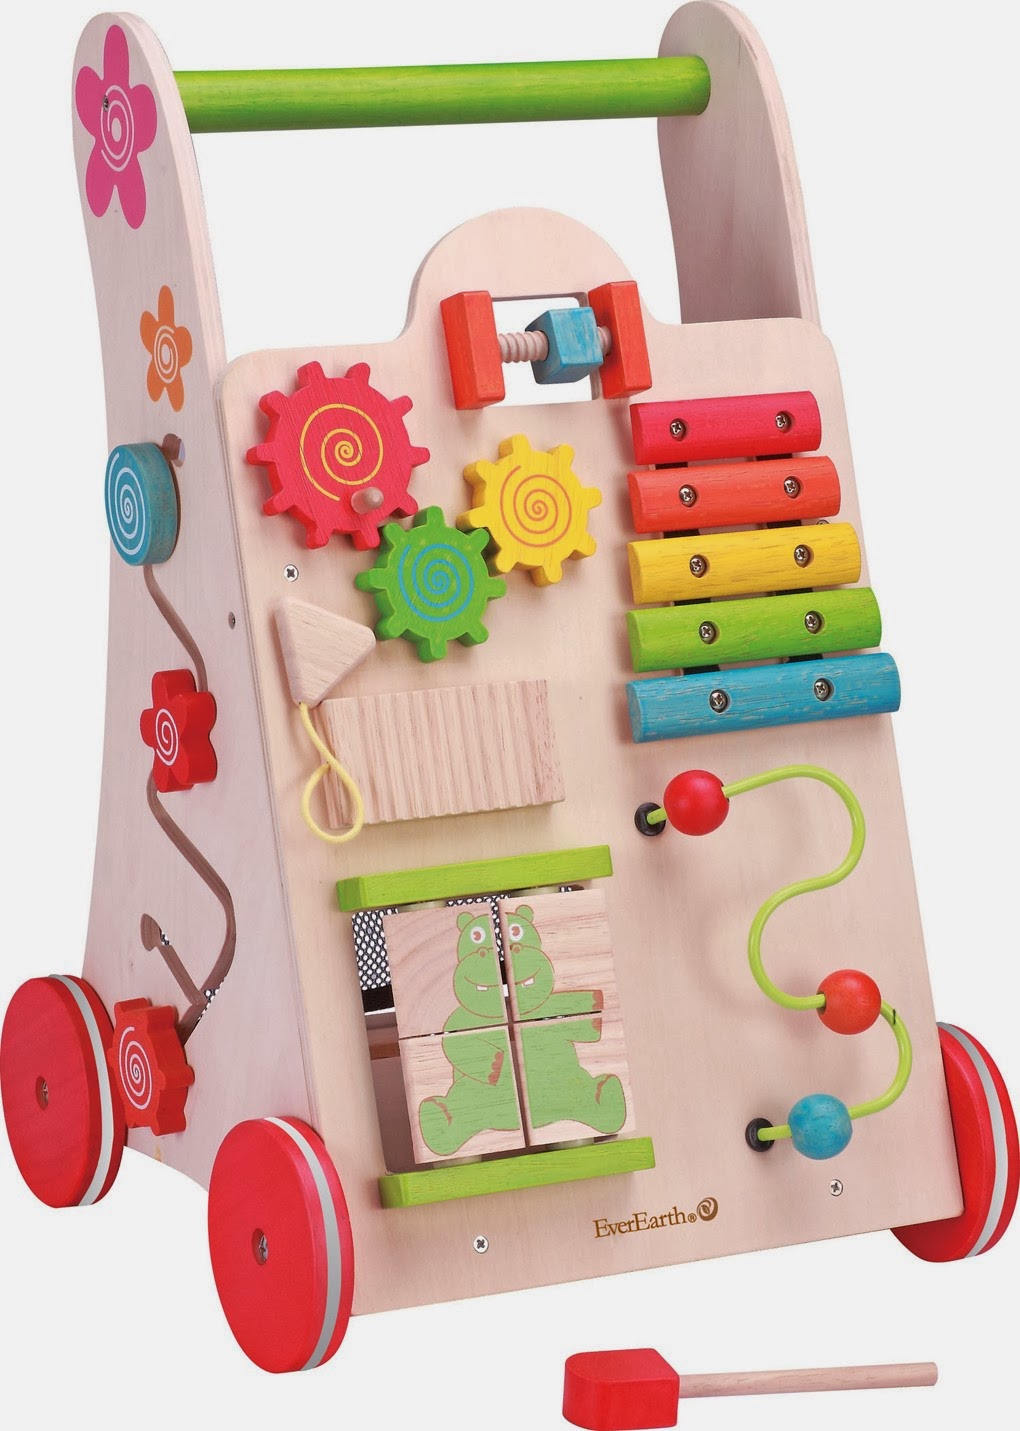 Childrens Wooden Toys Toy Play Kitchen Furniture Dollhouse KidKraft Teamson Guidecraft Reviews 